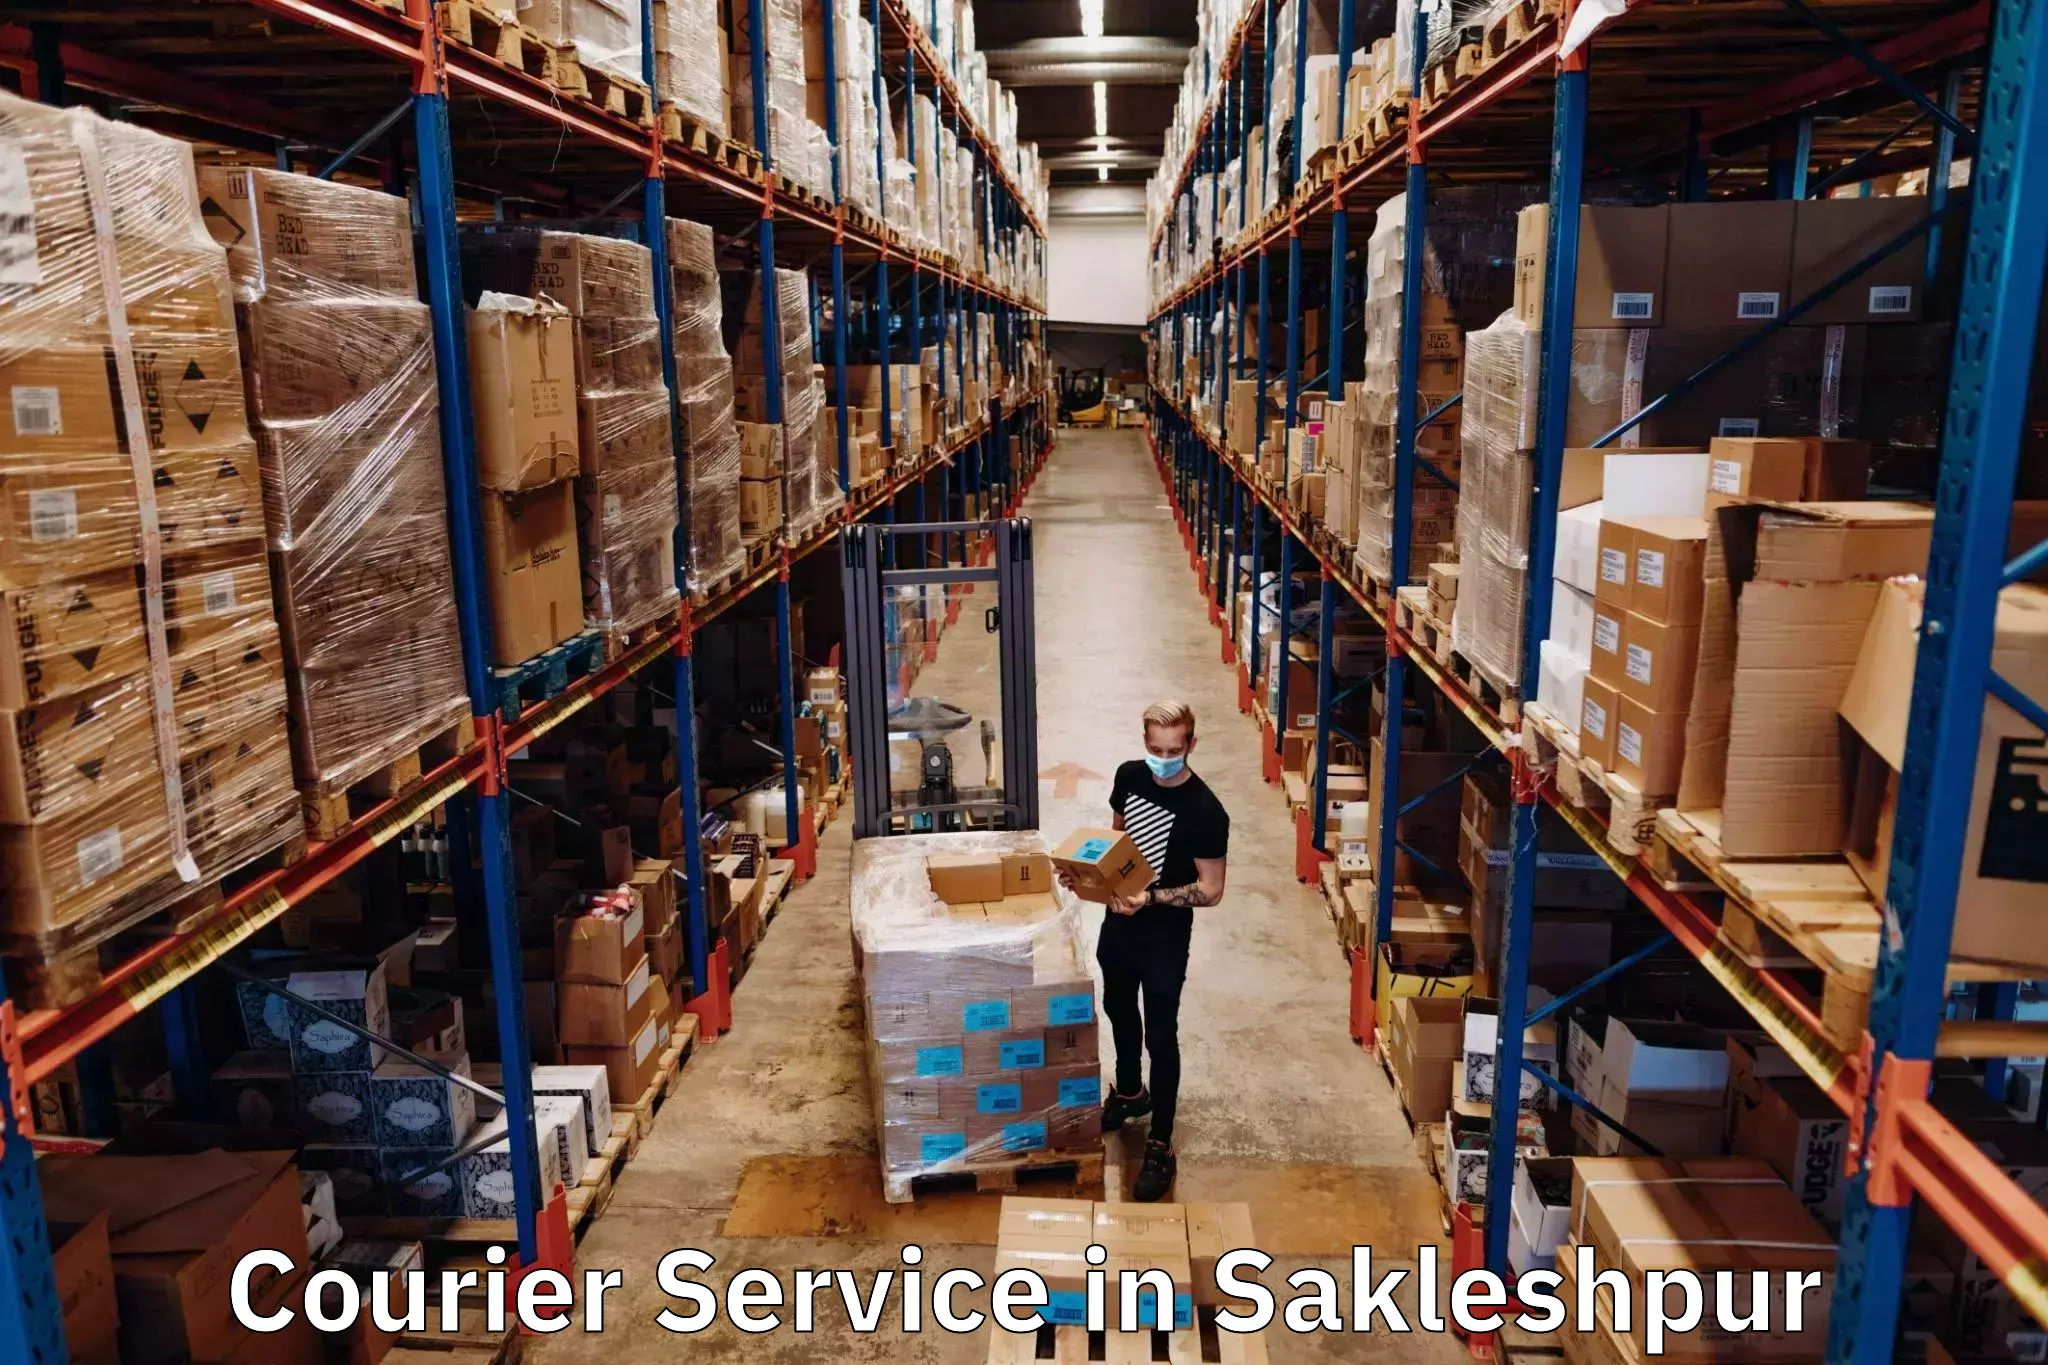 Courier service innovation in Sakleshpur